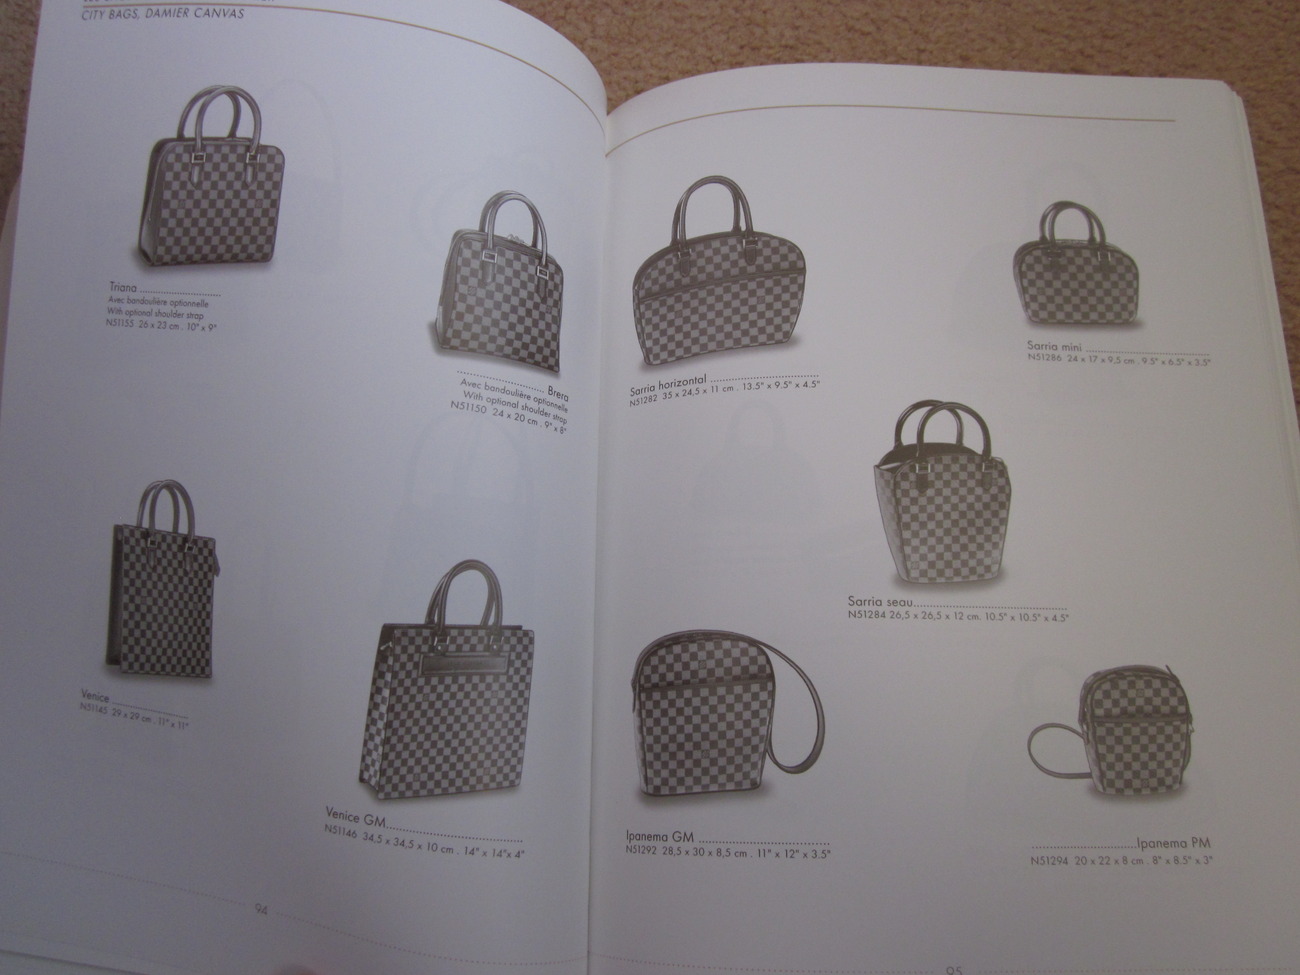  Louis Vuitton Catalog  copyright 2002 Clothing Fashion